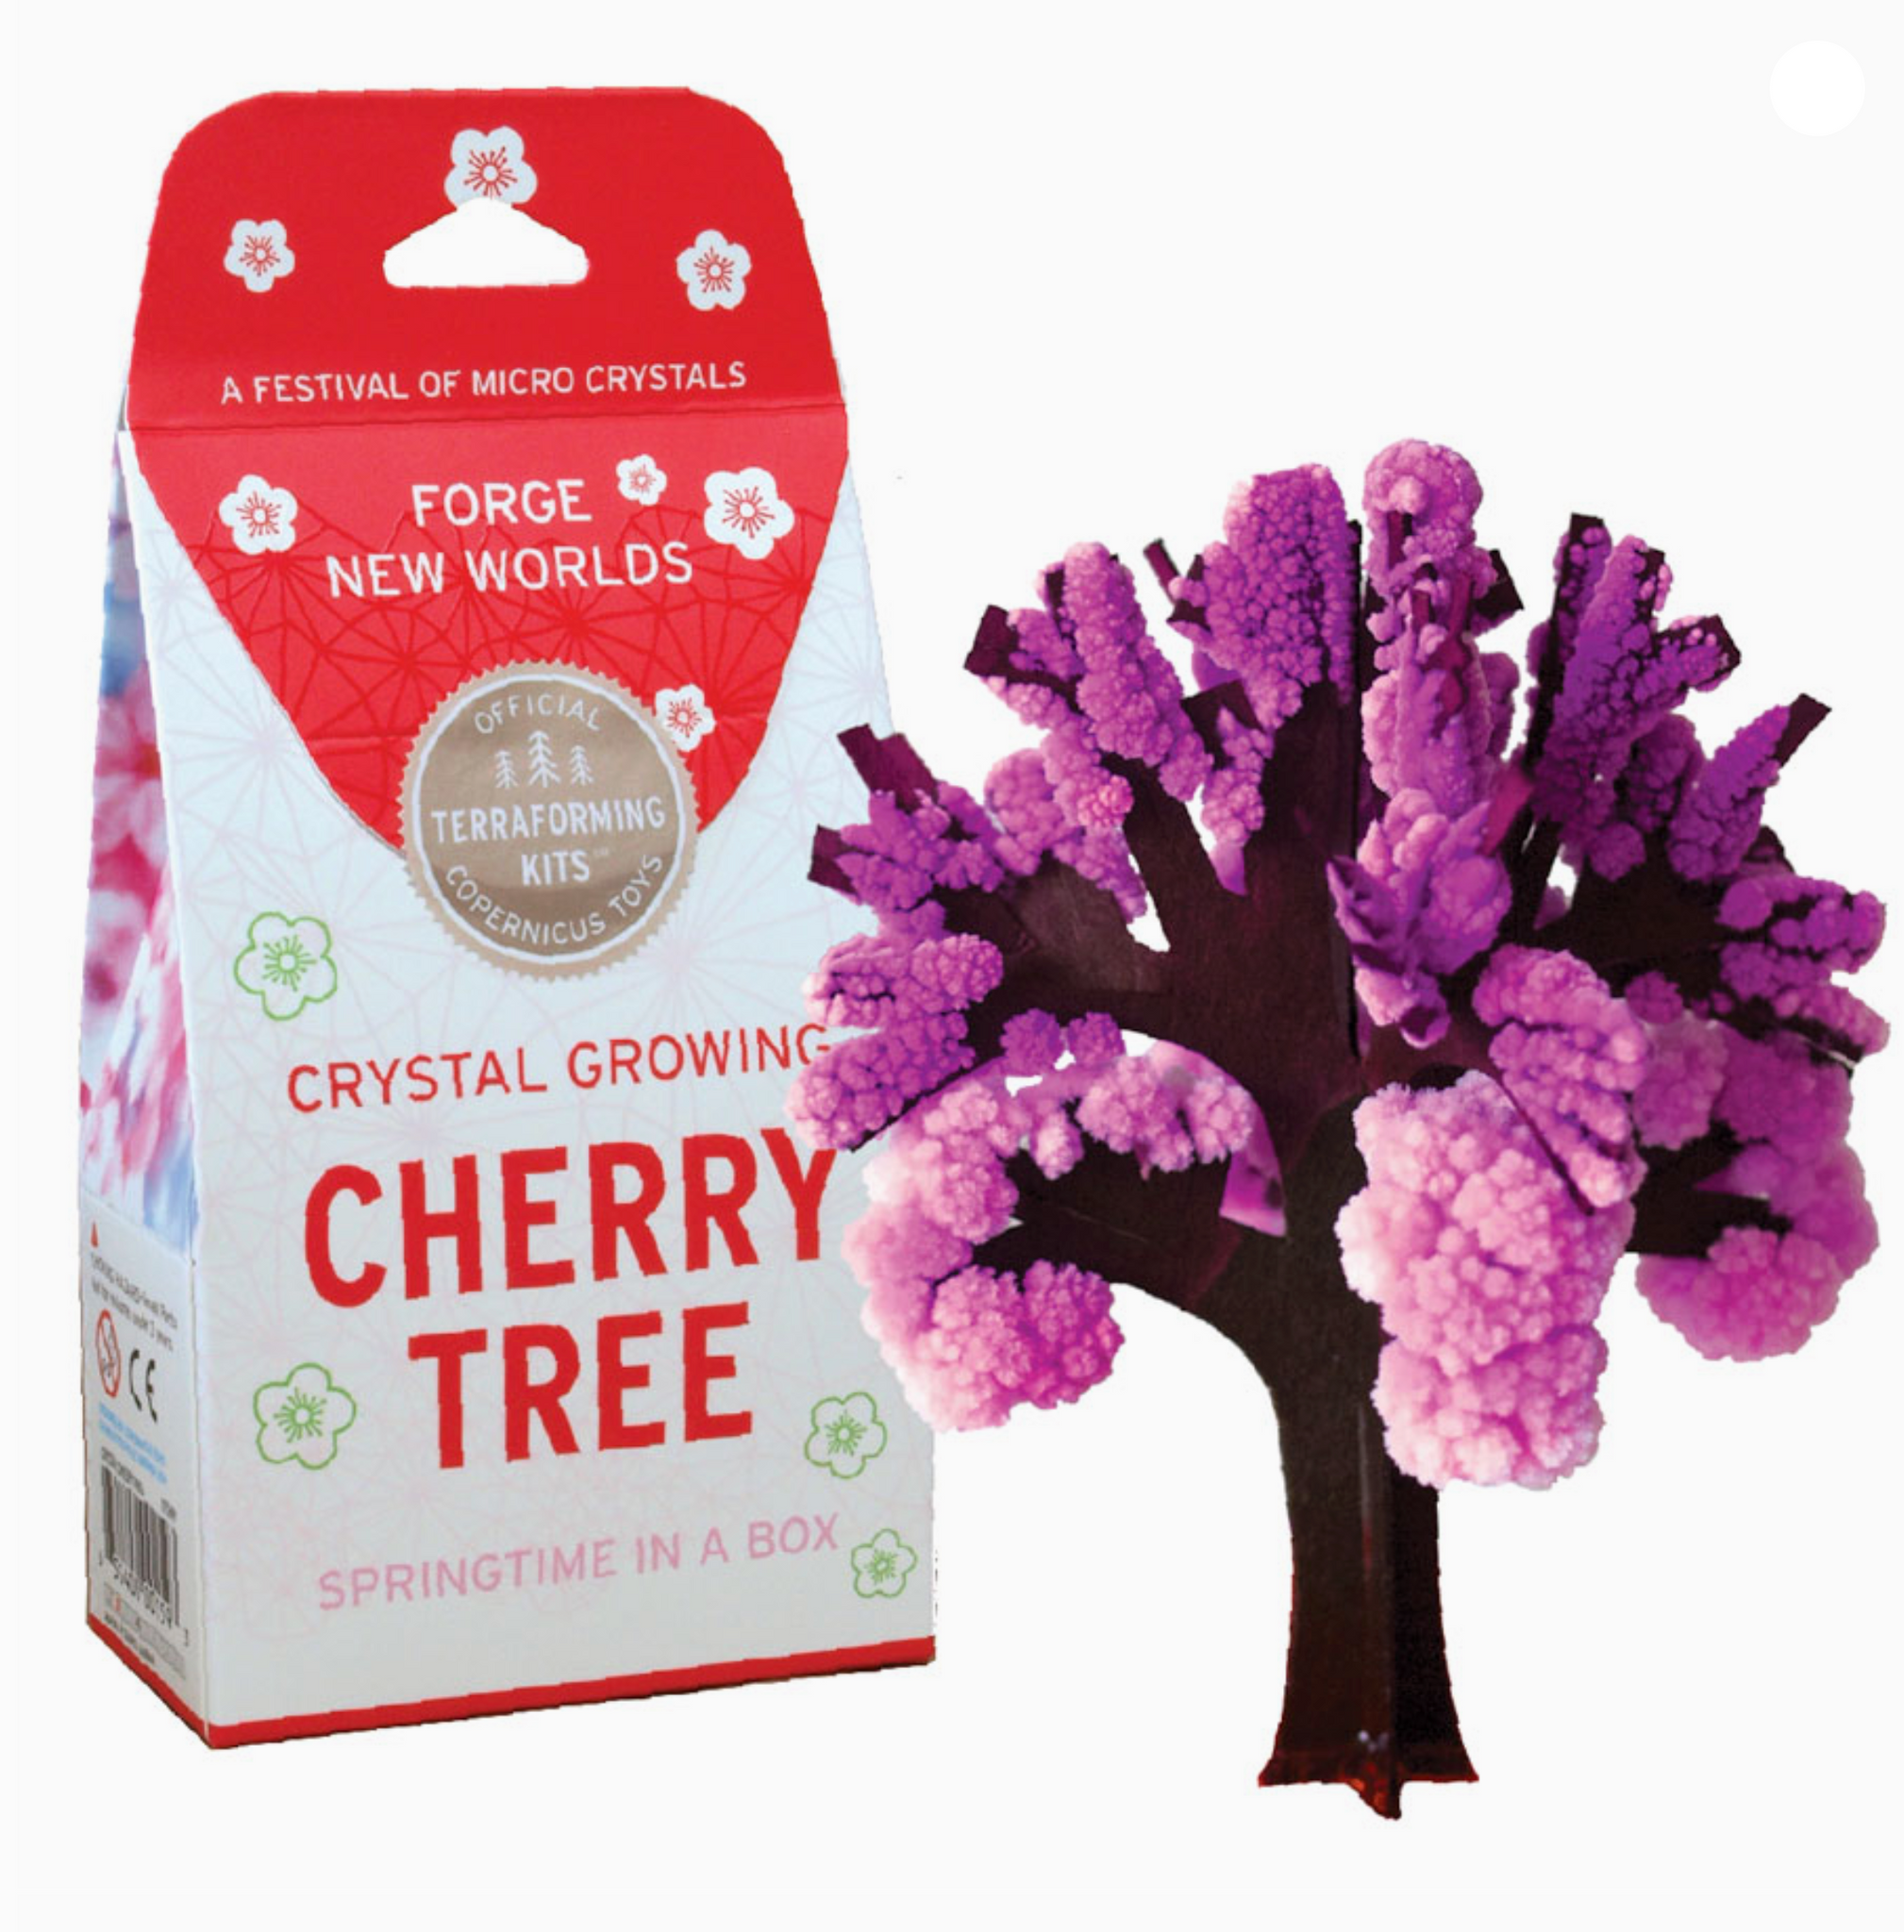 Crystal Growing Cherry Tree